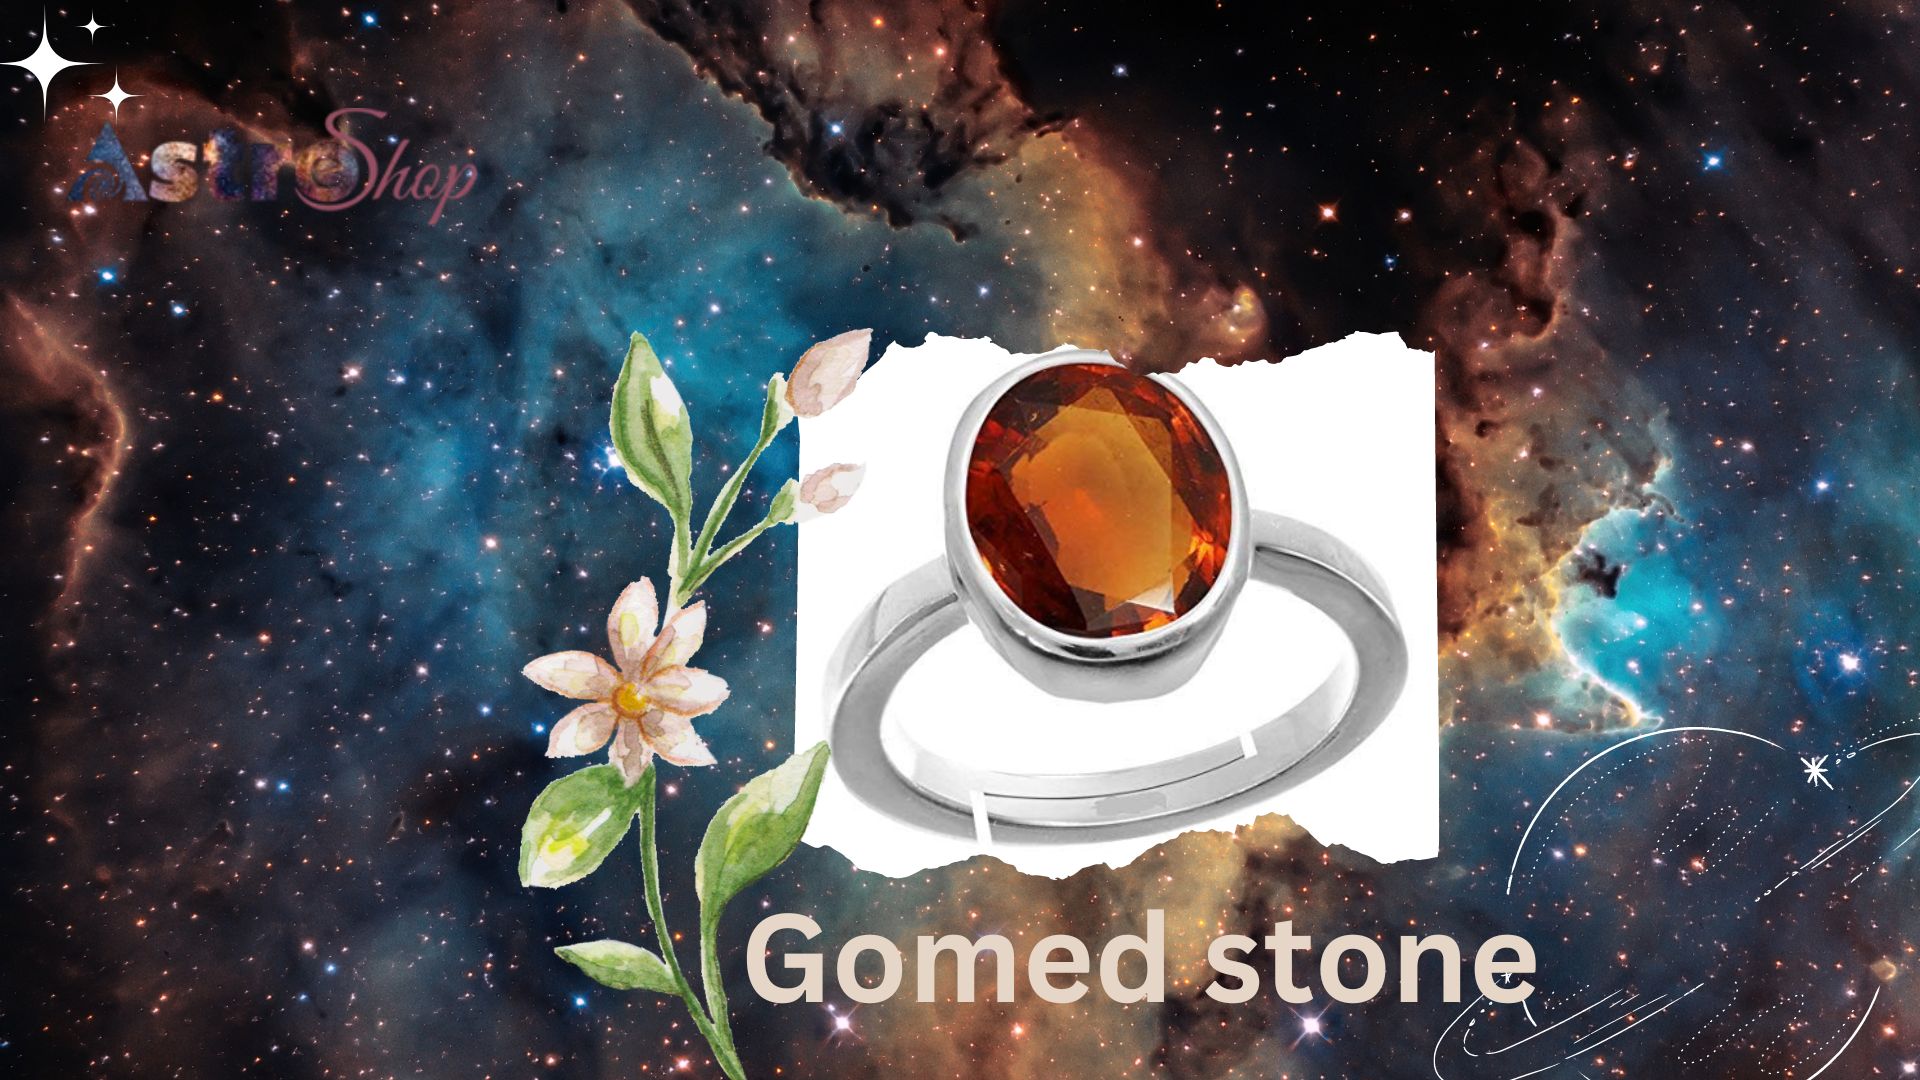 Gomed stone